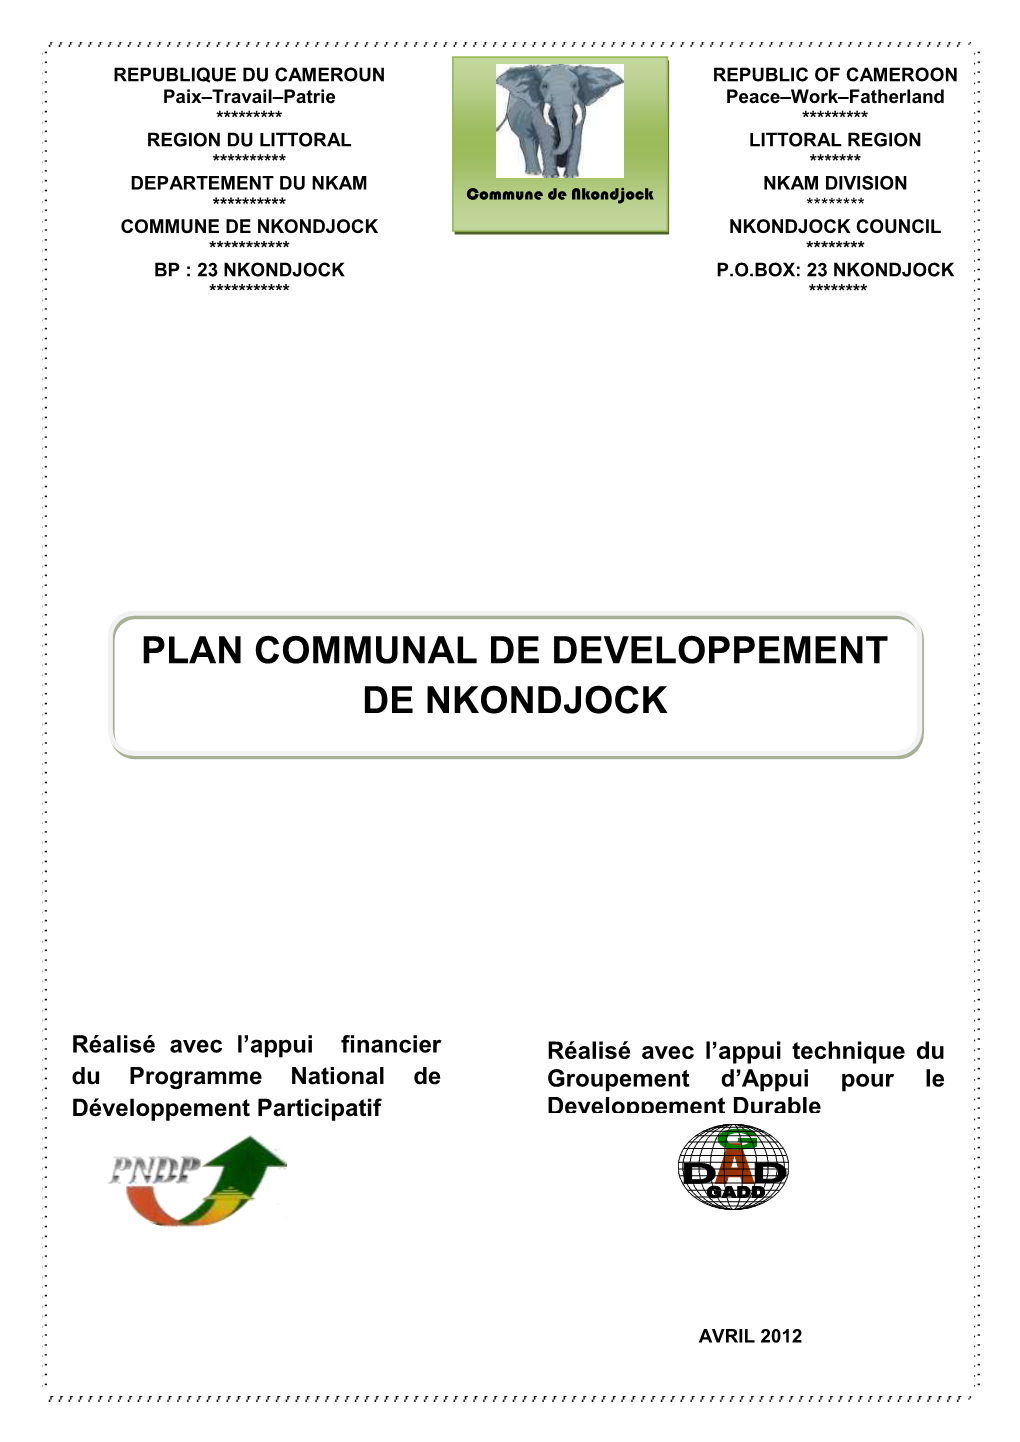 Plan Communal De Developpement De Nkondjock